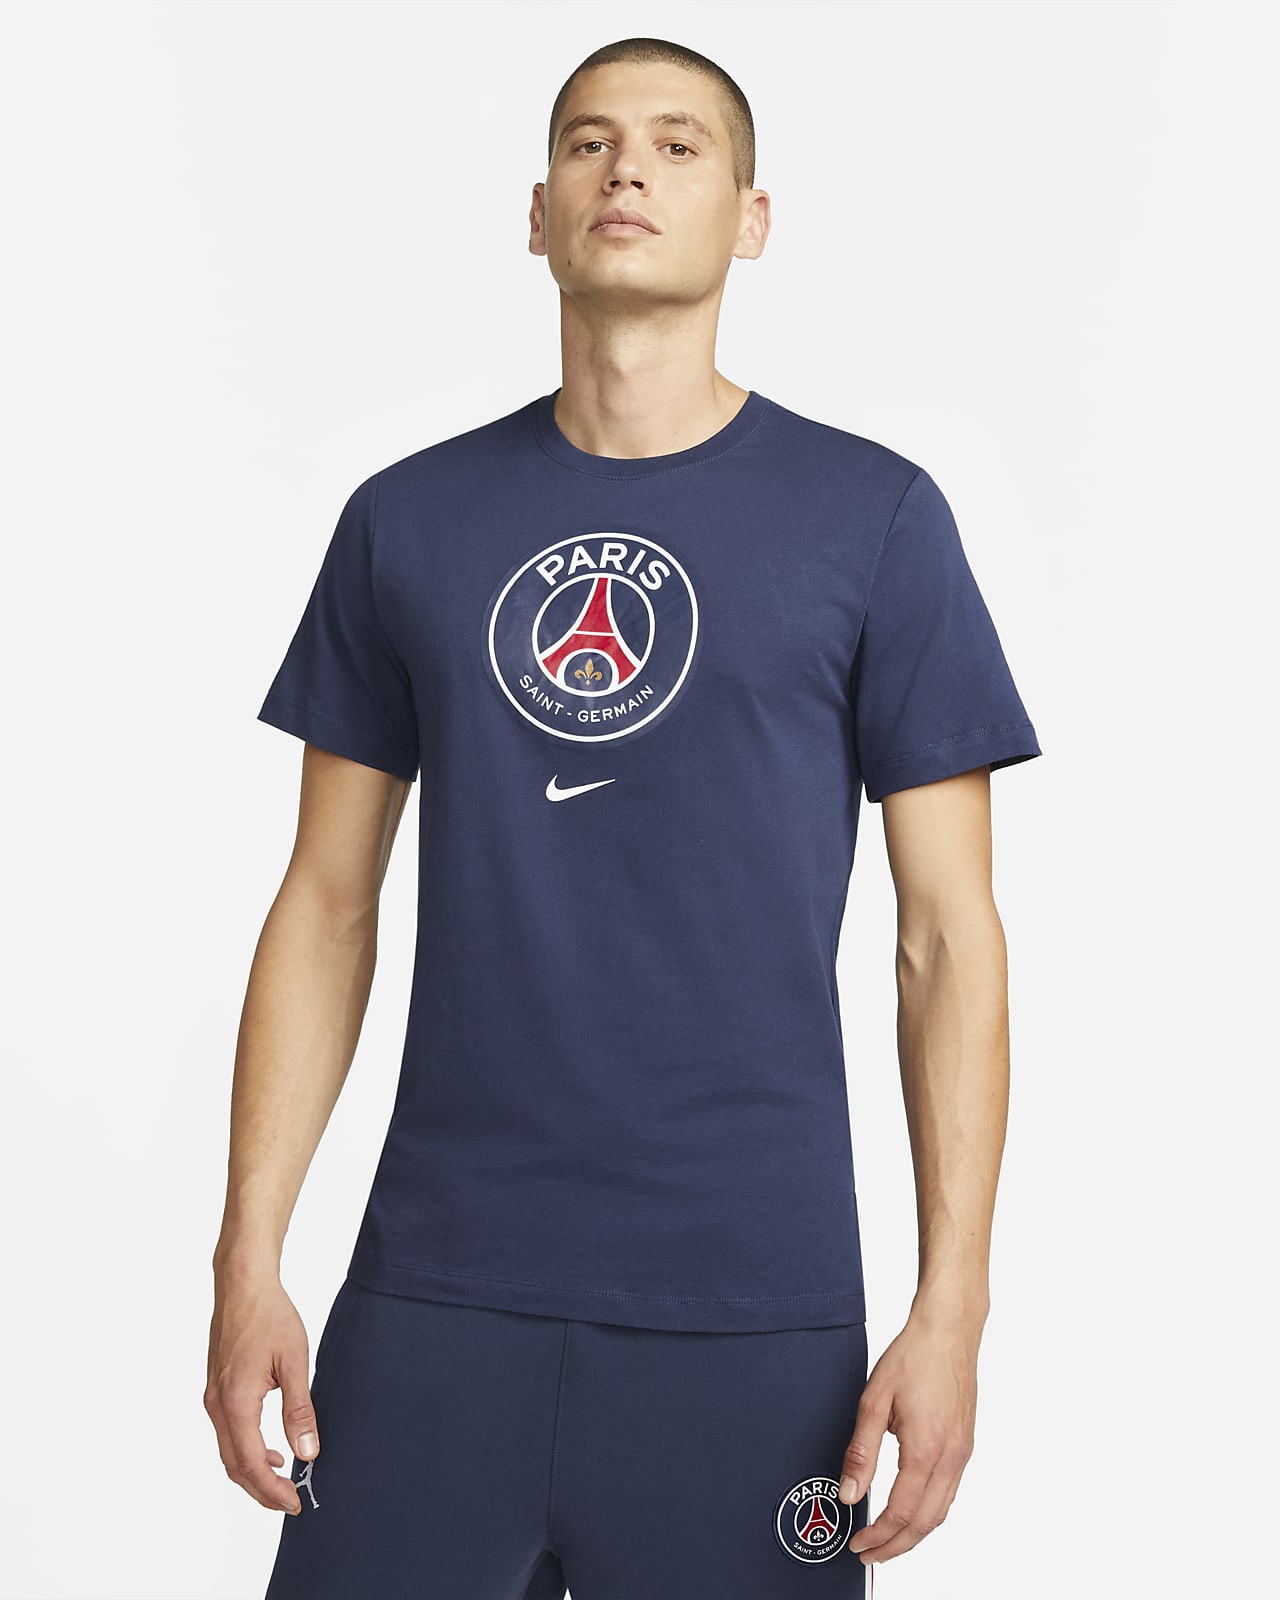 Saint-Germain Crest Men's Soccer T-Shirt.